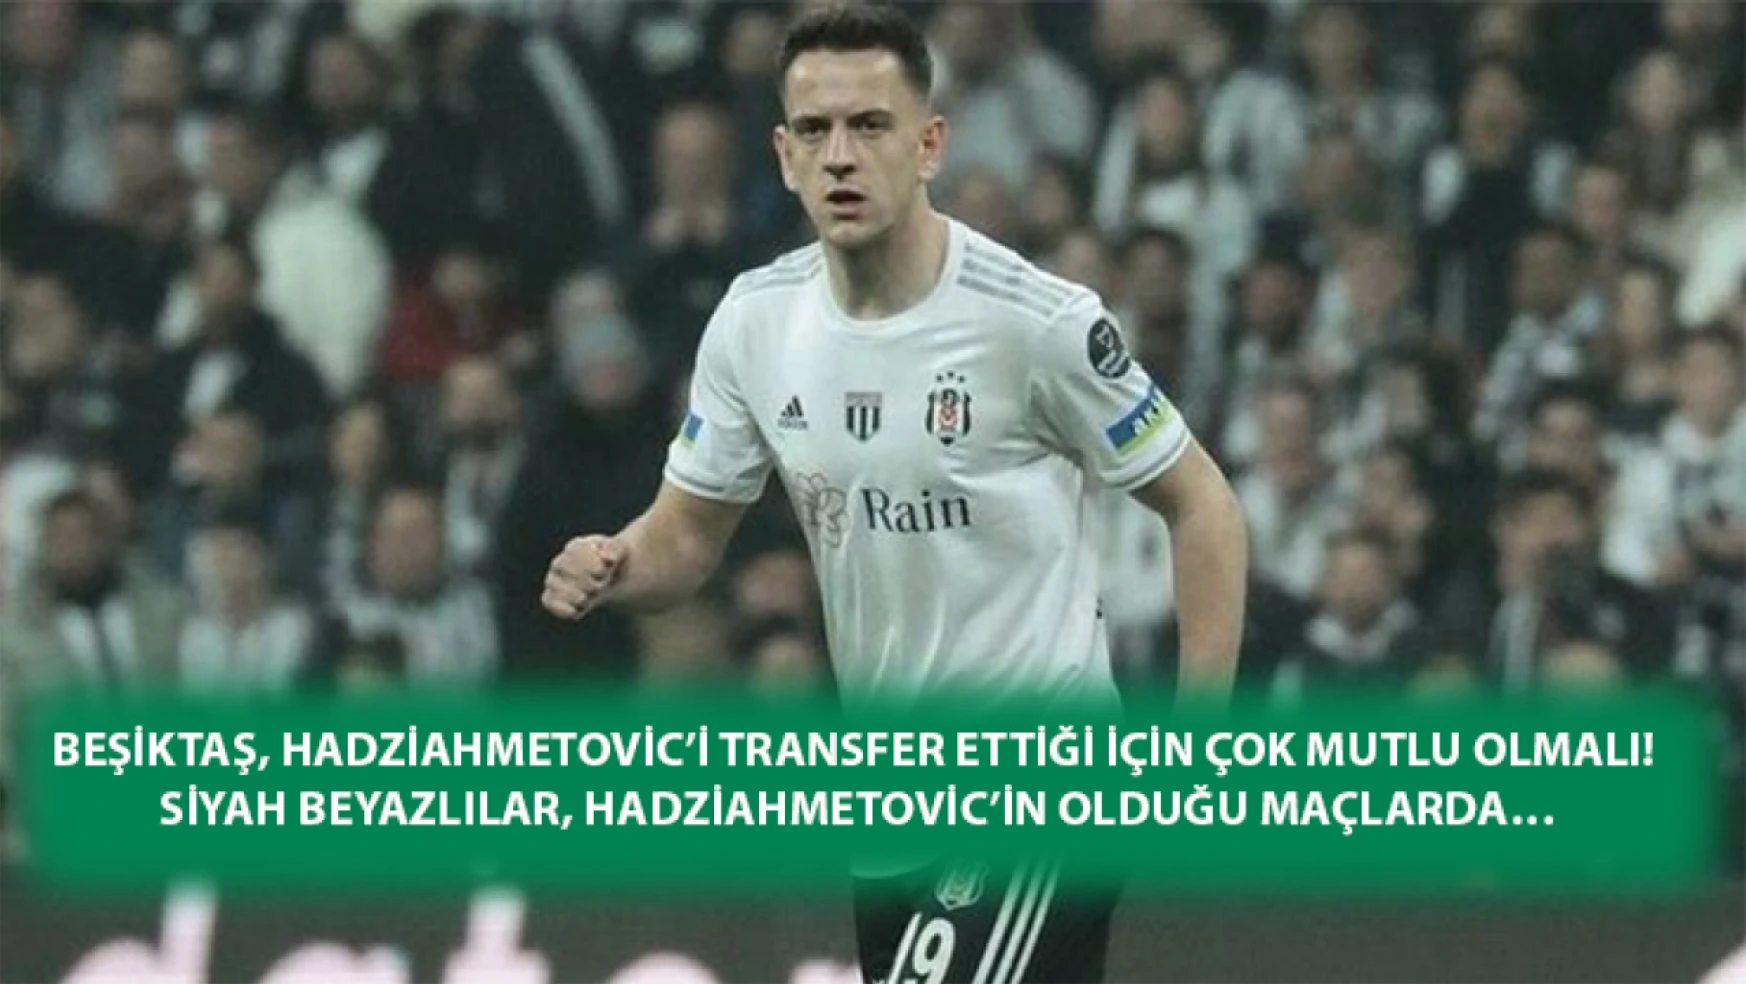 Beşiktaş, Hadziahmetovic'i transfer ettiği için çok mutlu olmalı! Siyah beyazlılar, Hadziahmetovic'in olduğu maçlarda…